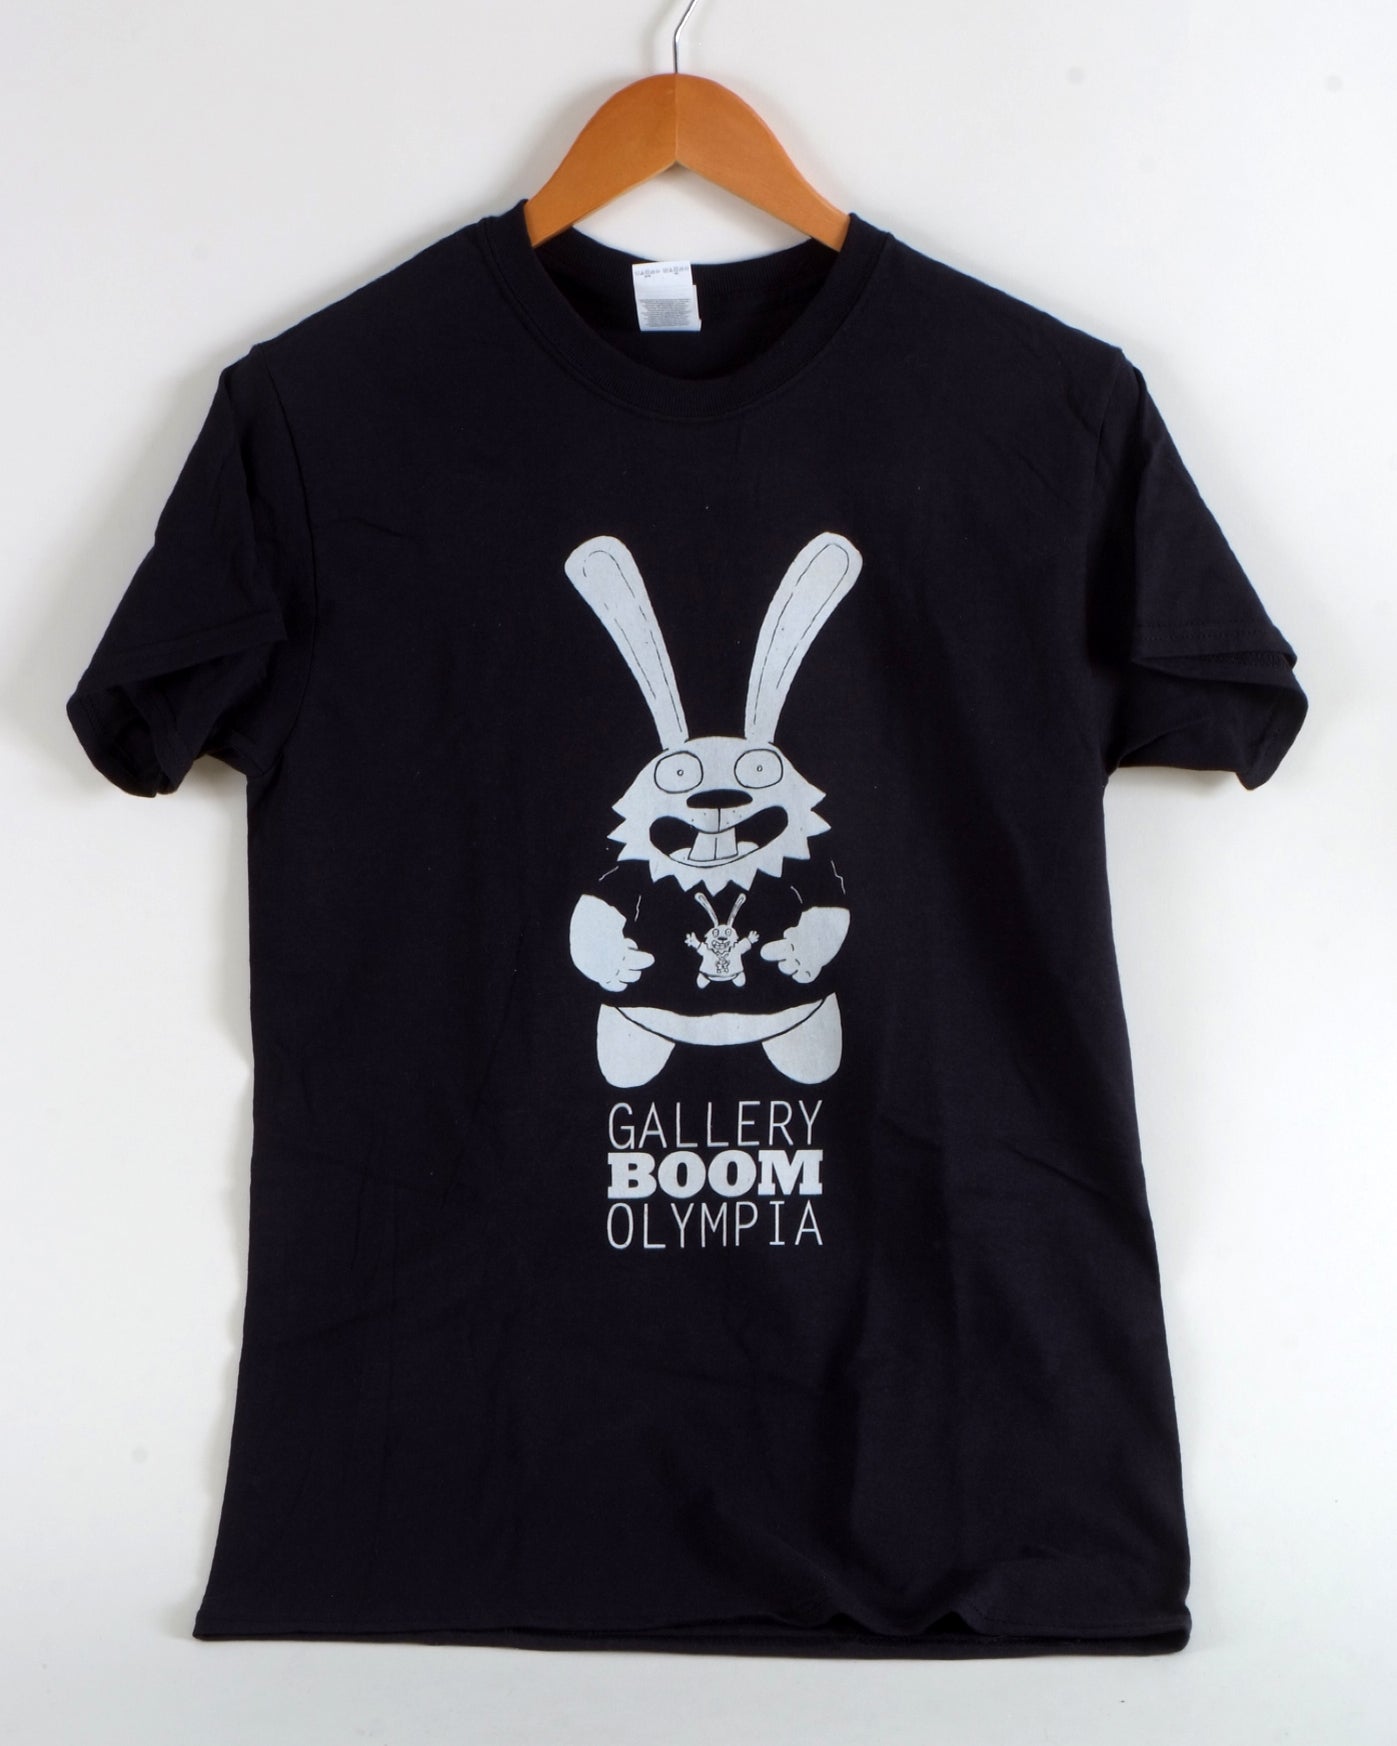 Gallery Boom T-shirt